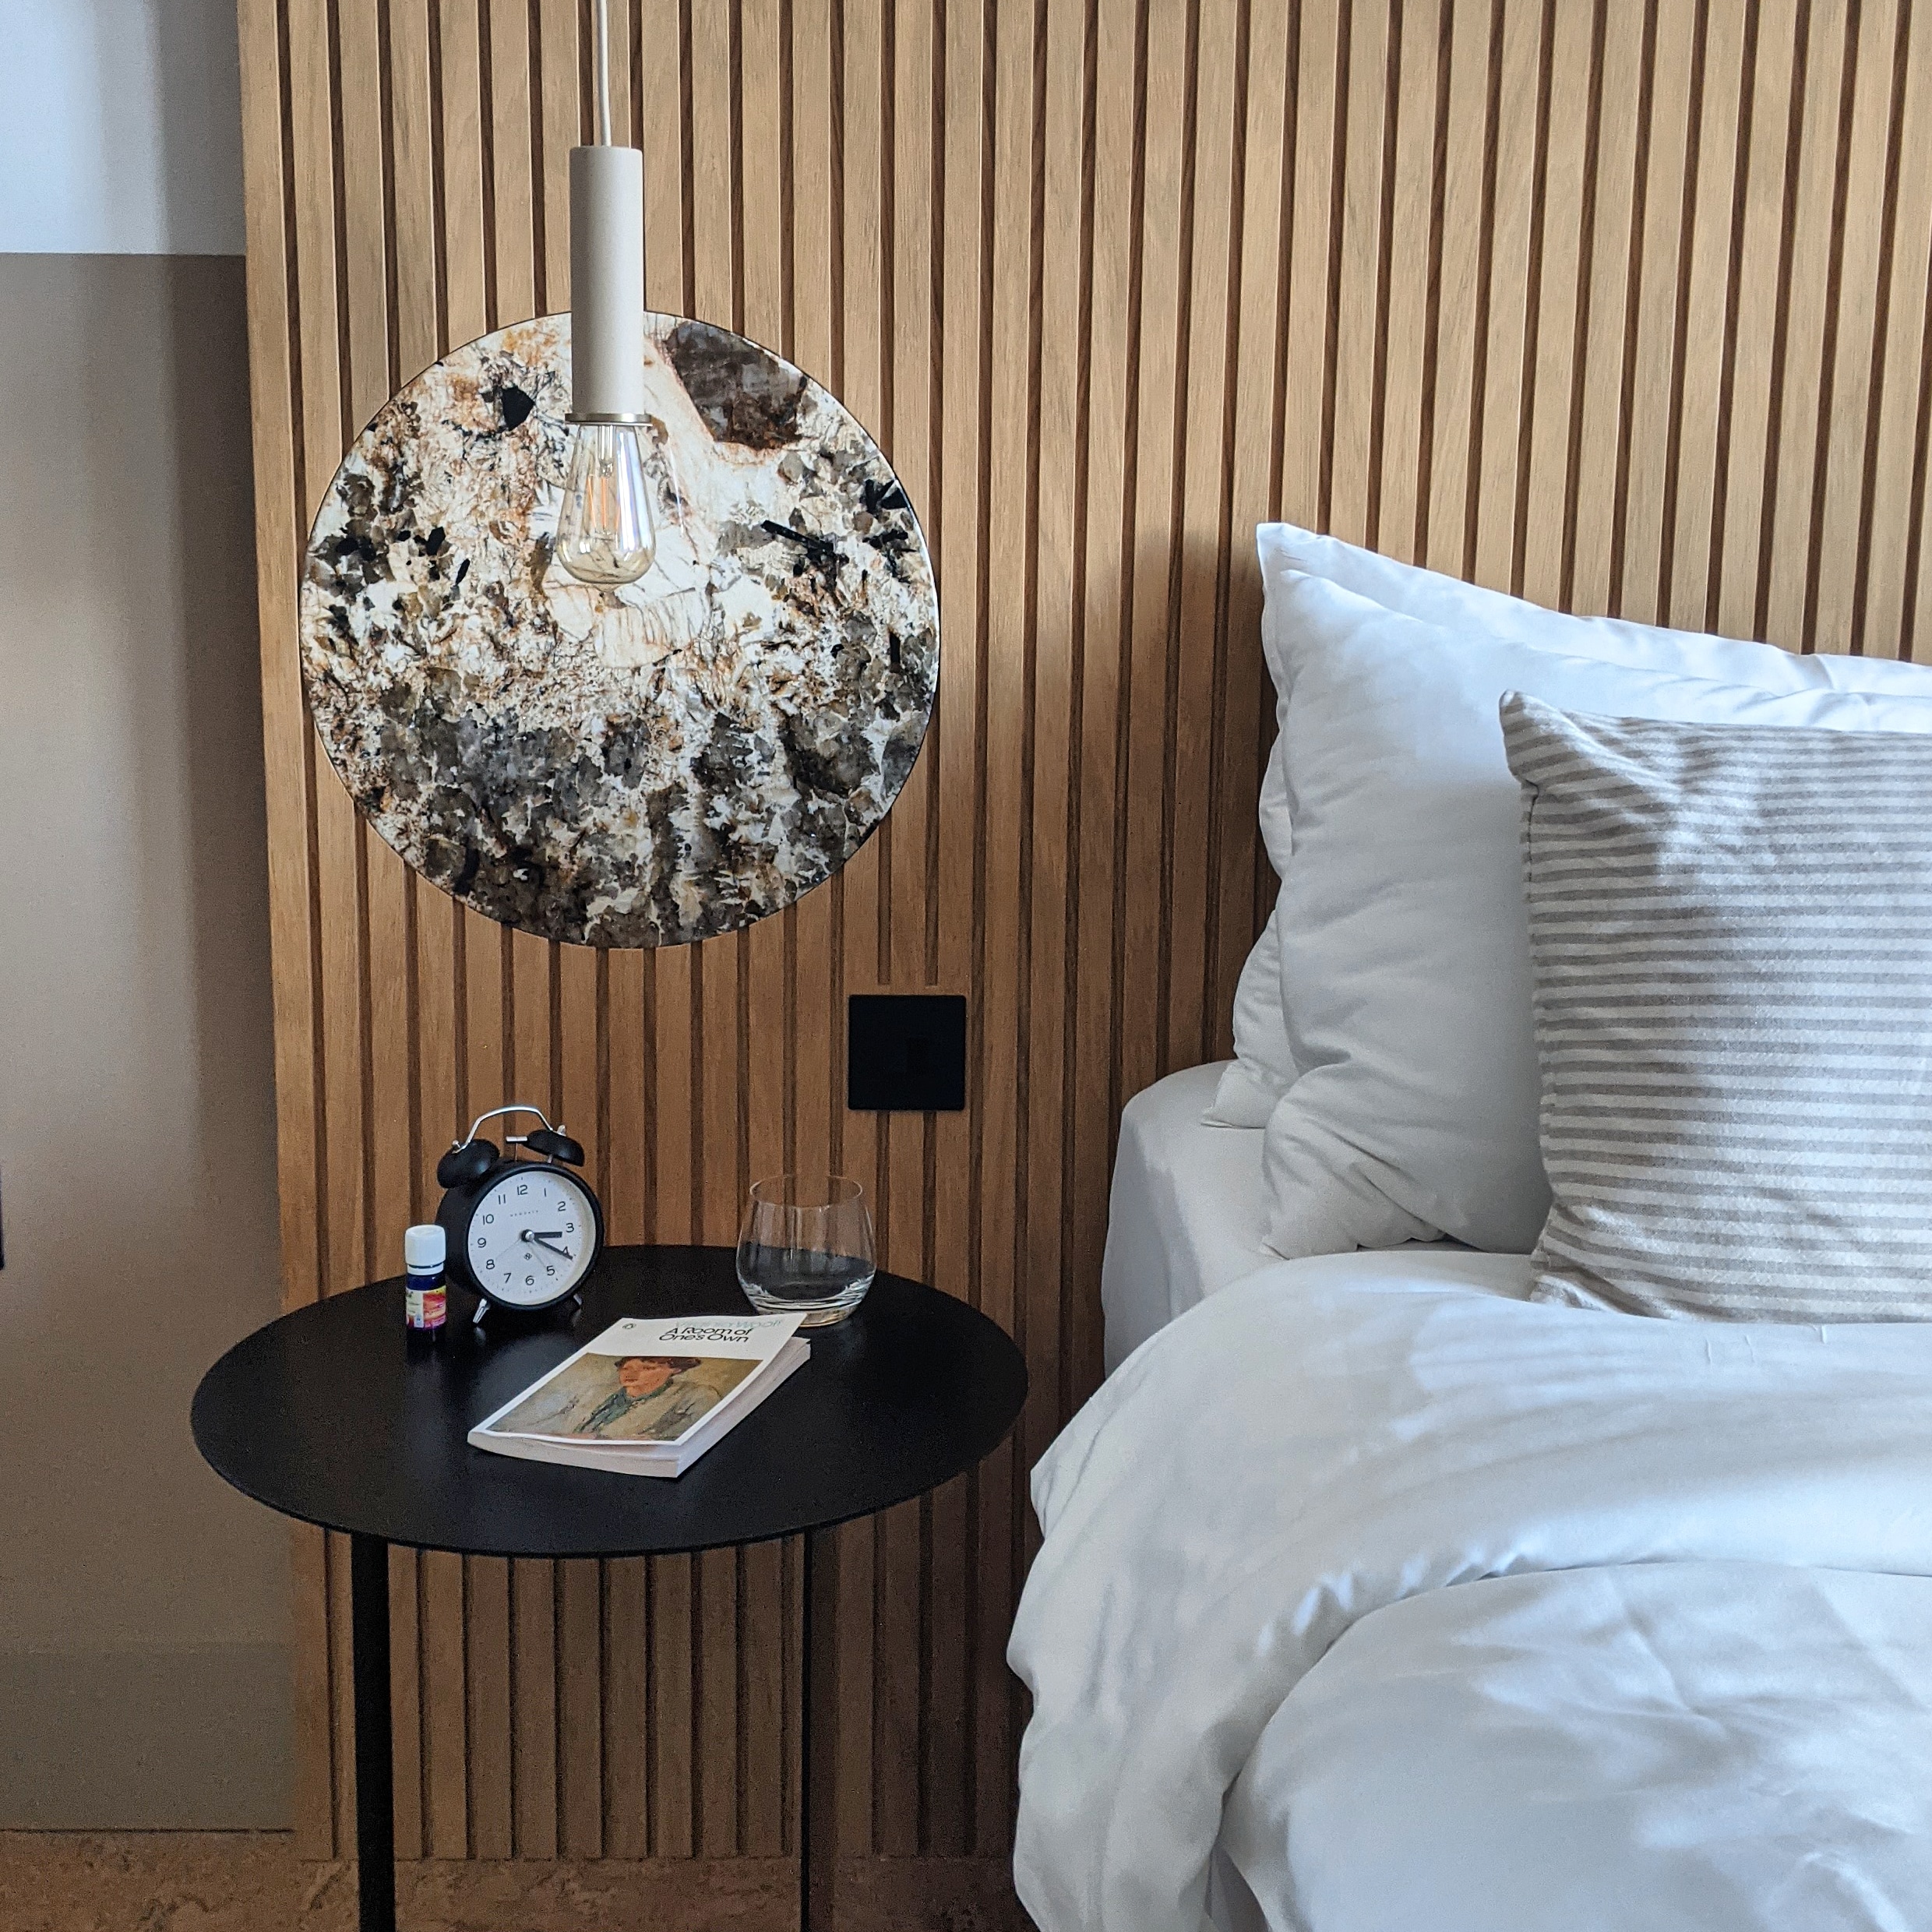 wooden slatted bedhead and bedside table details at port hotel in eastbourne